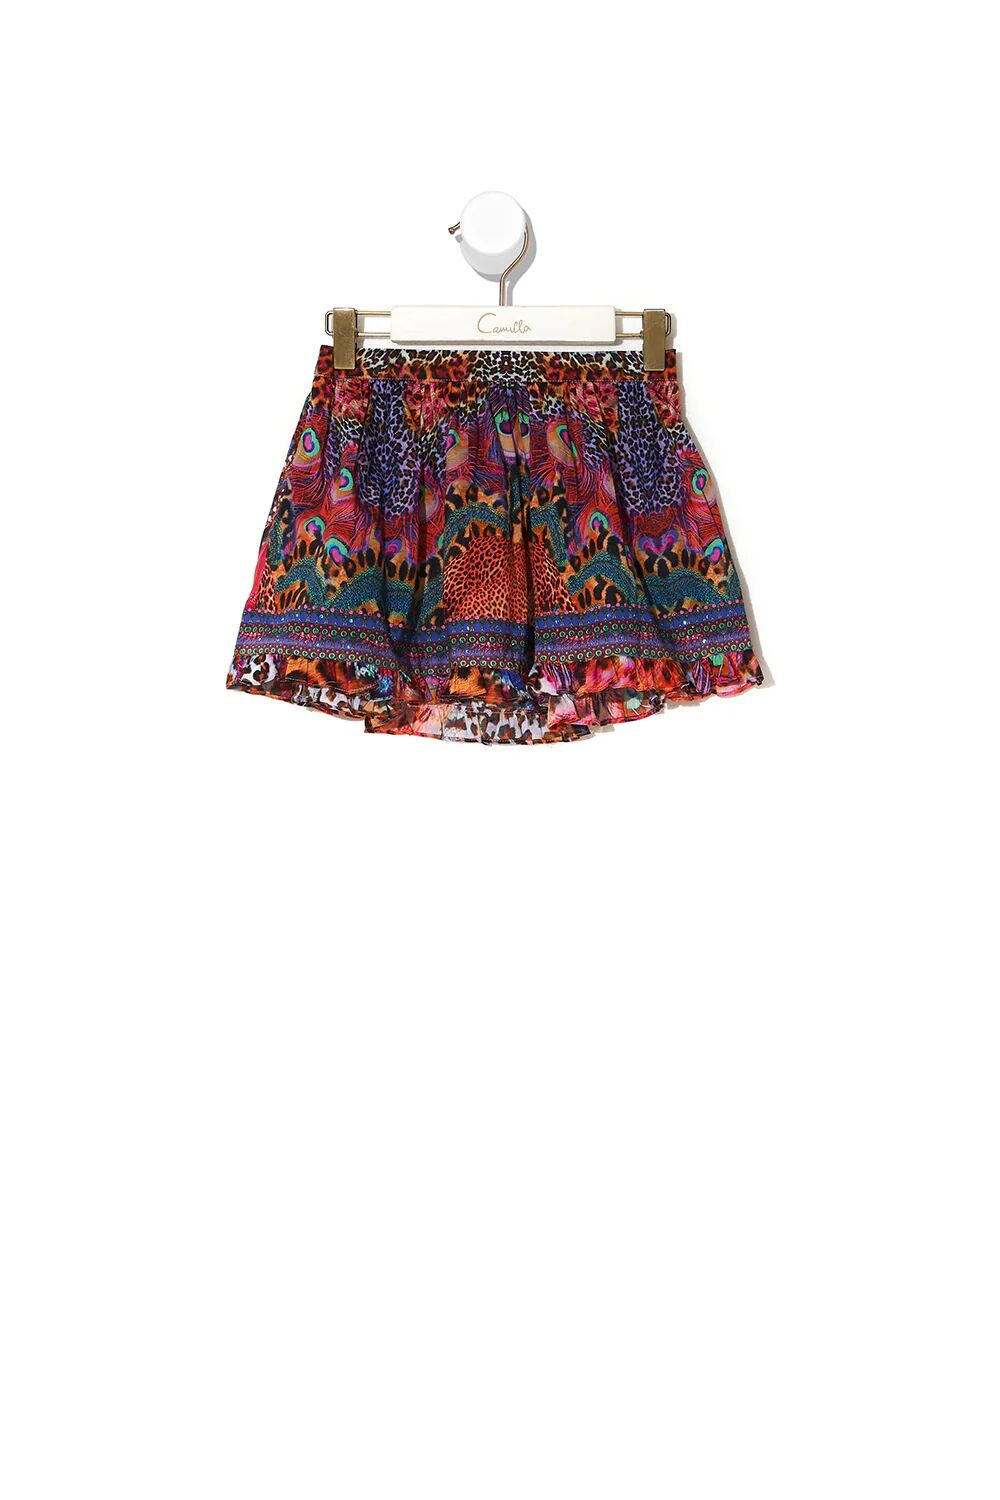 Camilla eBoutique Kids Frill Mini Skirt 12-14 Xanadu Rising, 12  - Size: 12